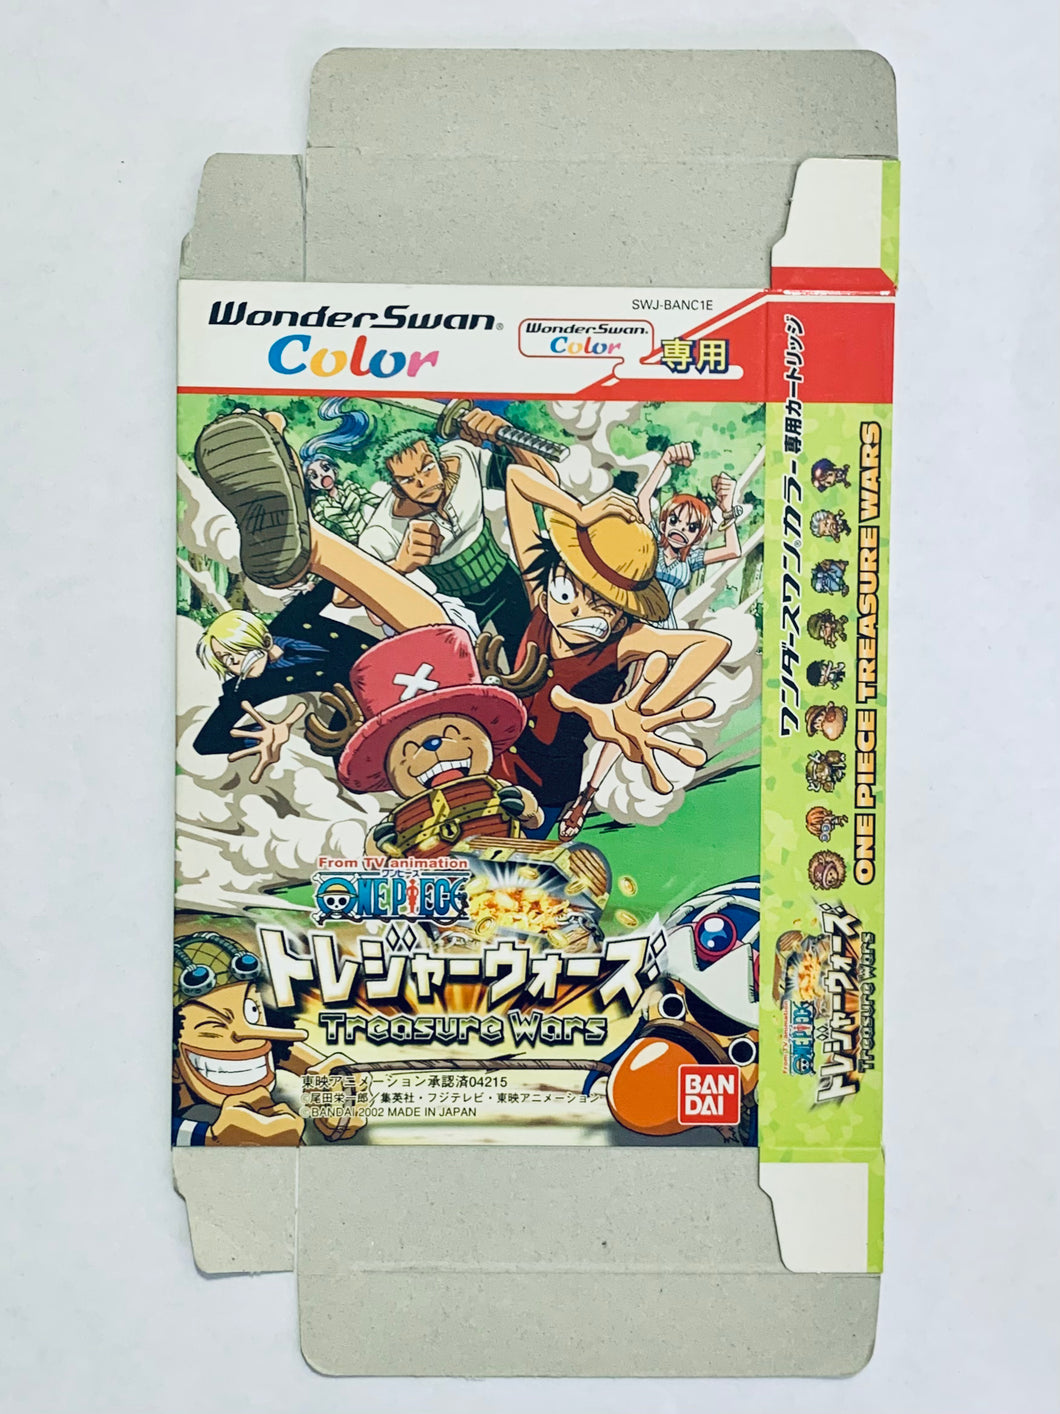 One Piece: Treasure Wars - WonderSwan Color - WSC - JP - Box Only (SWJ-BANC1E)